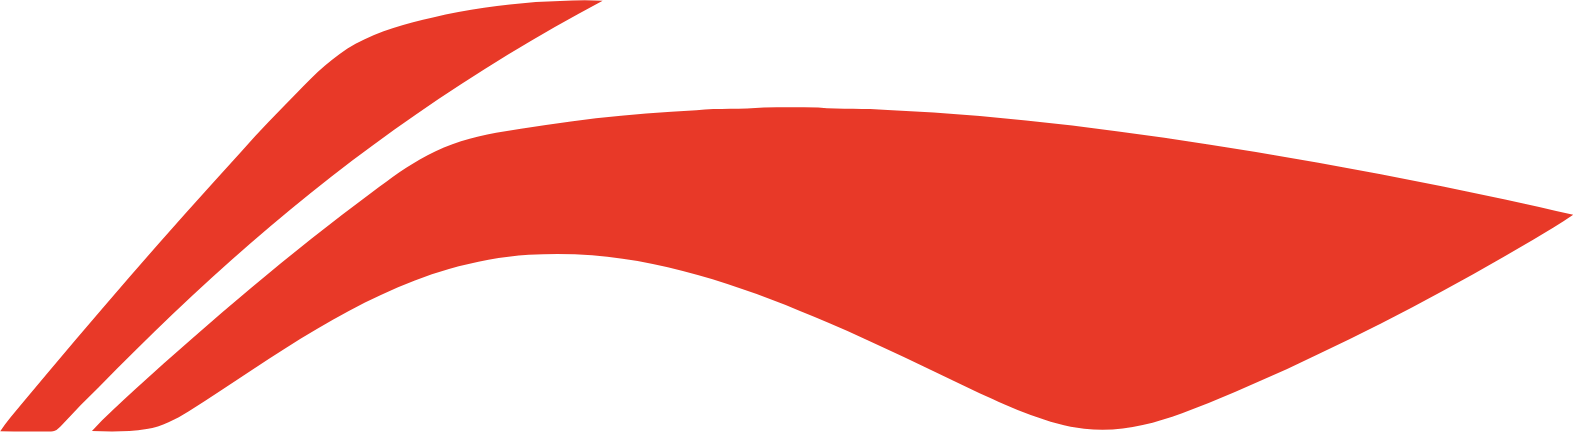 Li Ning Company logo (PNG transparent)